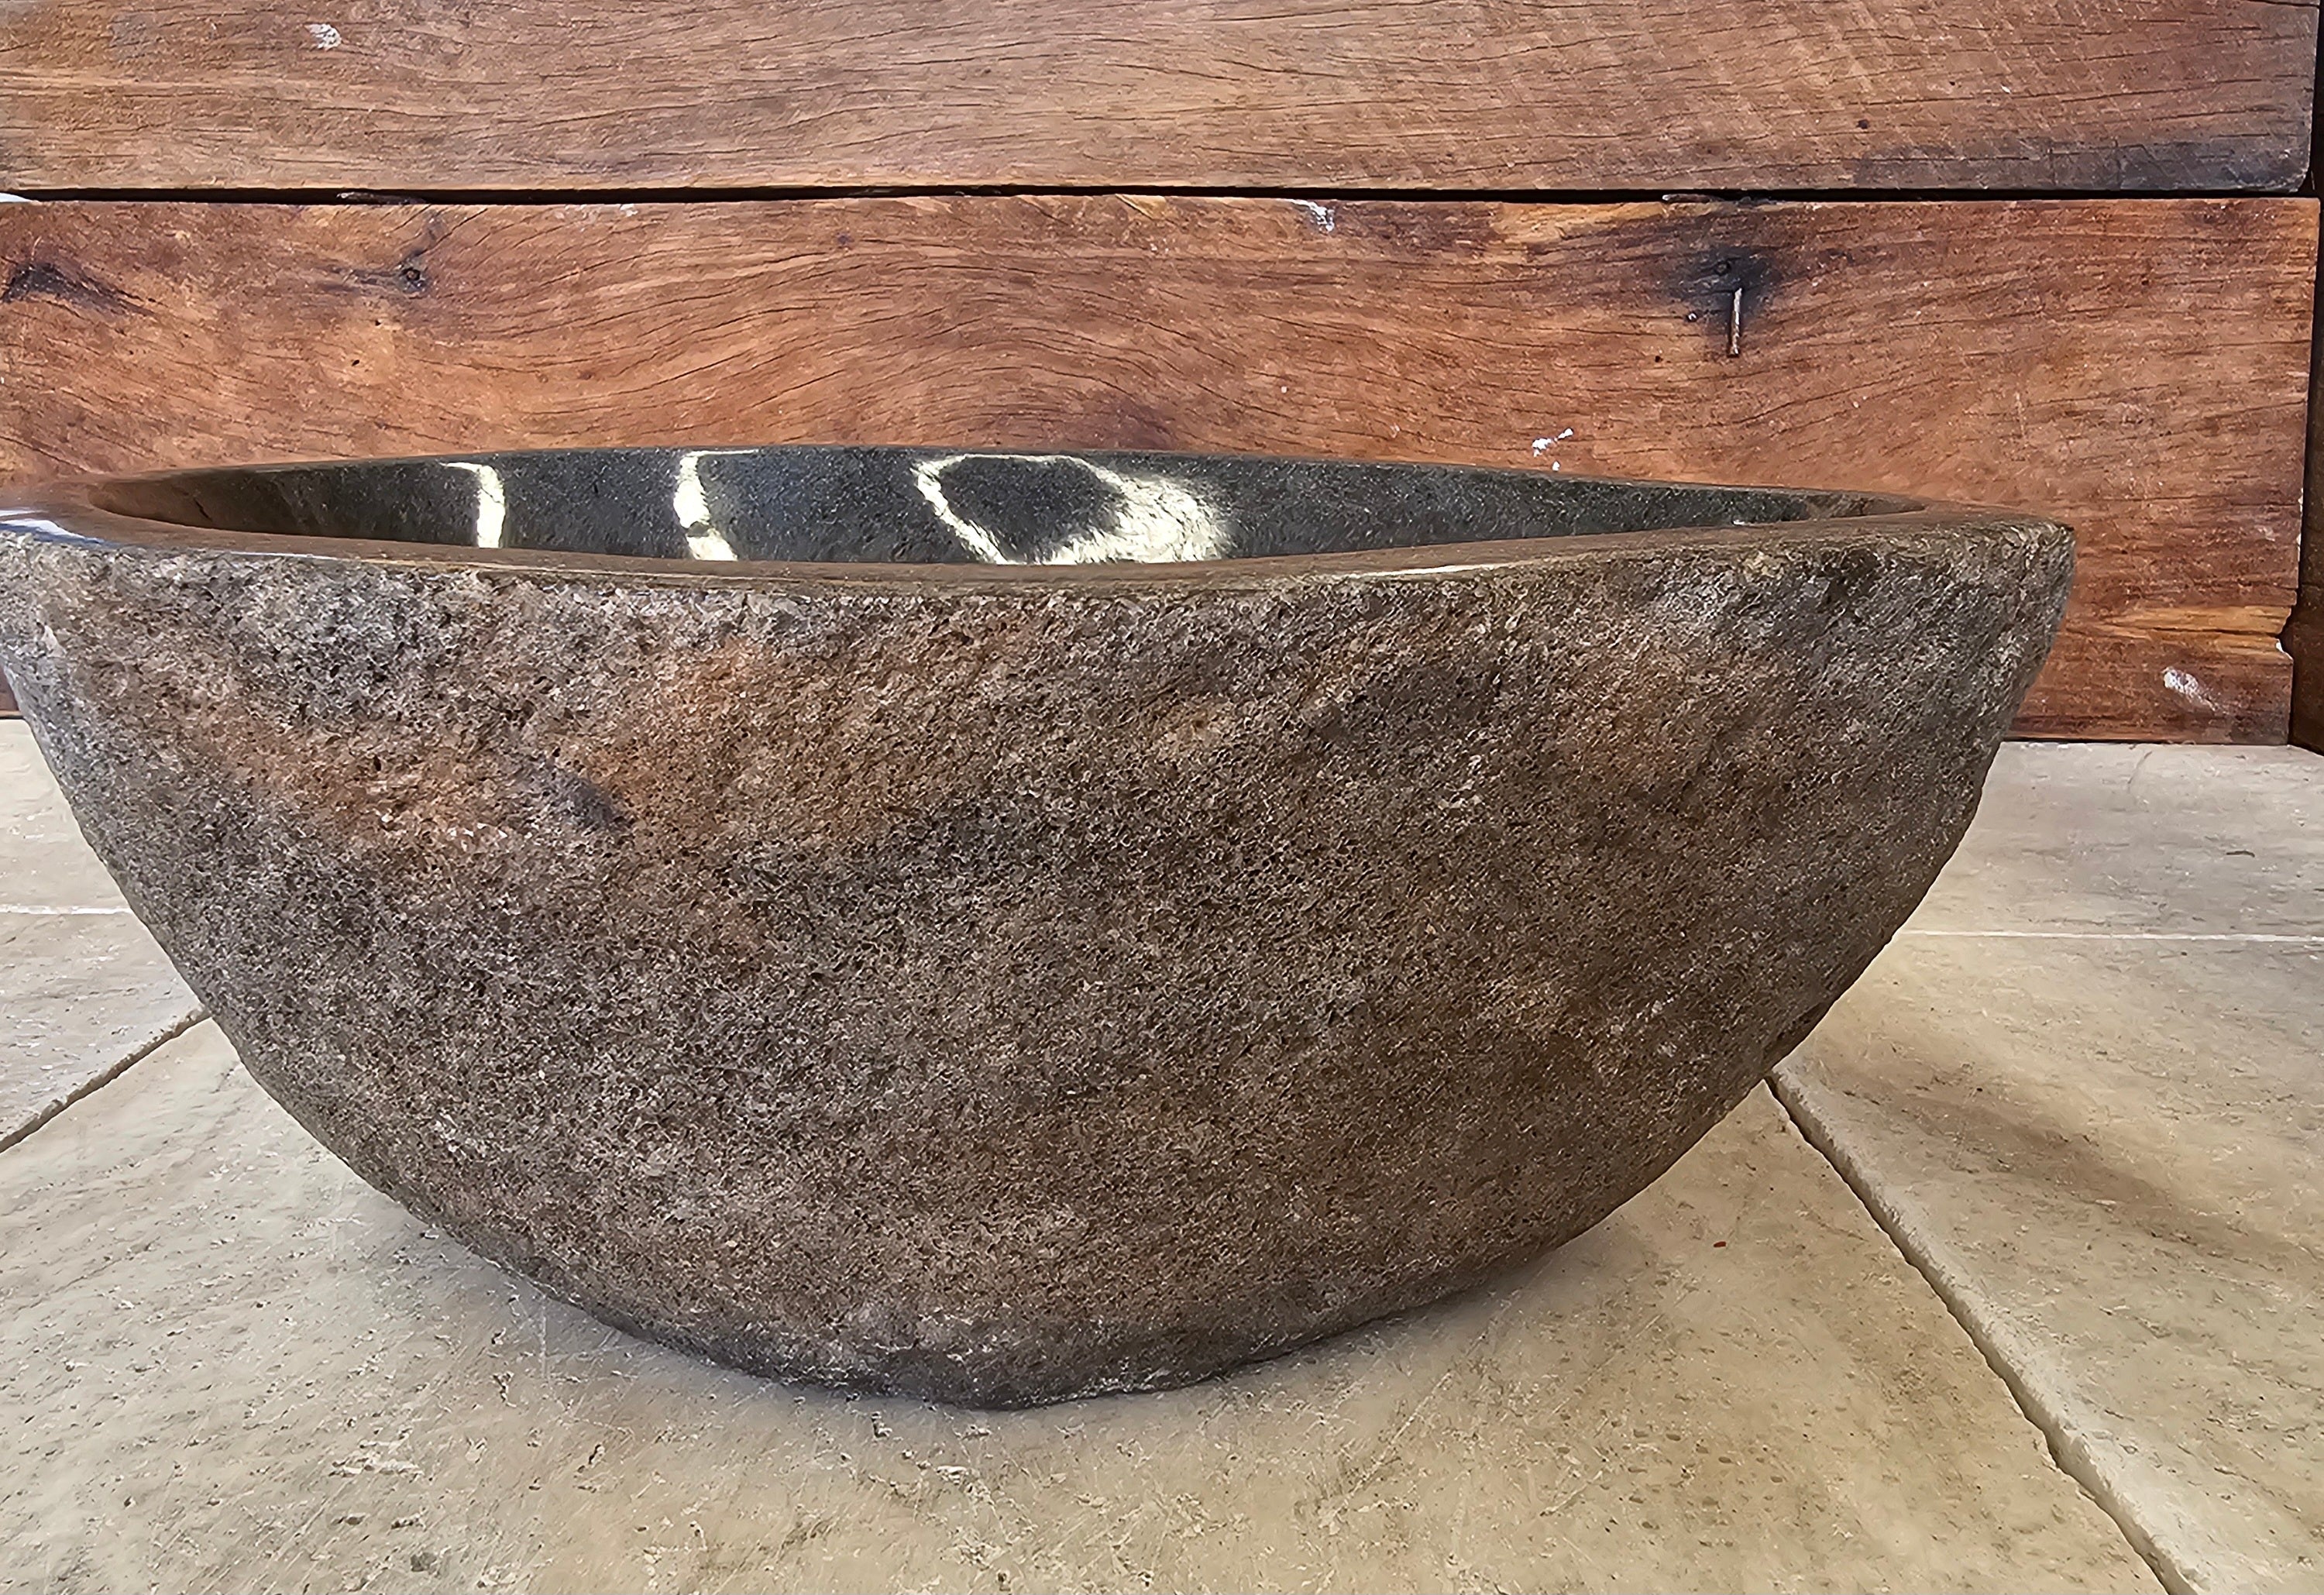 Handmade Natural Oval River Stone Bathroom Basin - RM 2306169